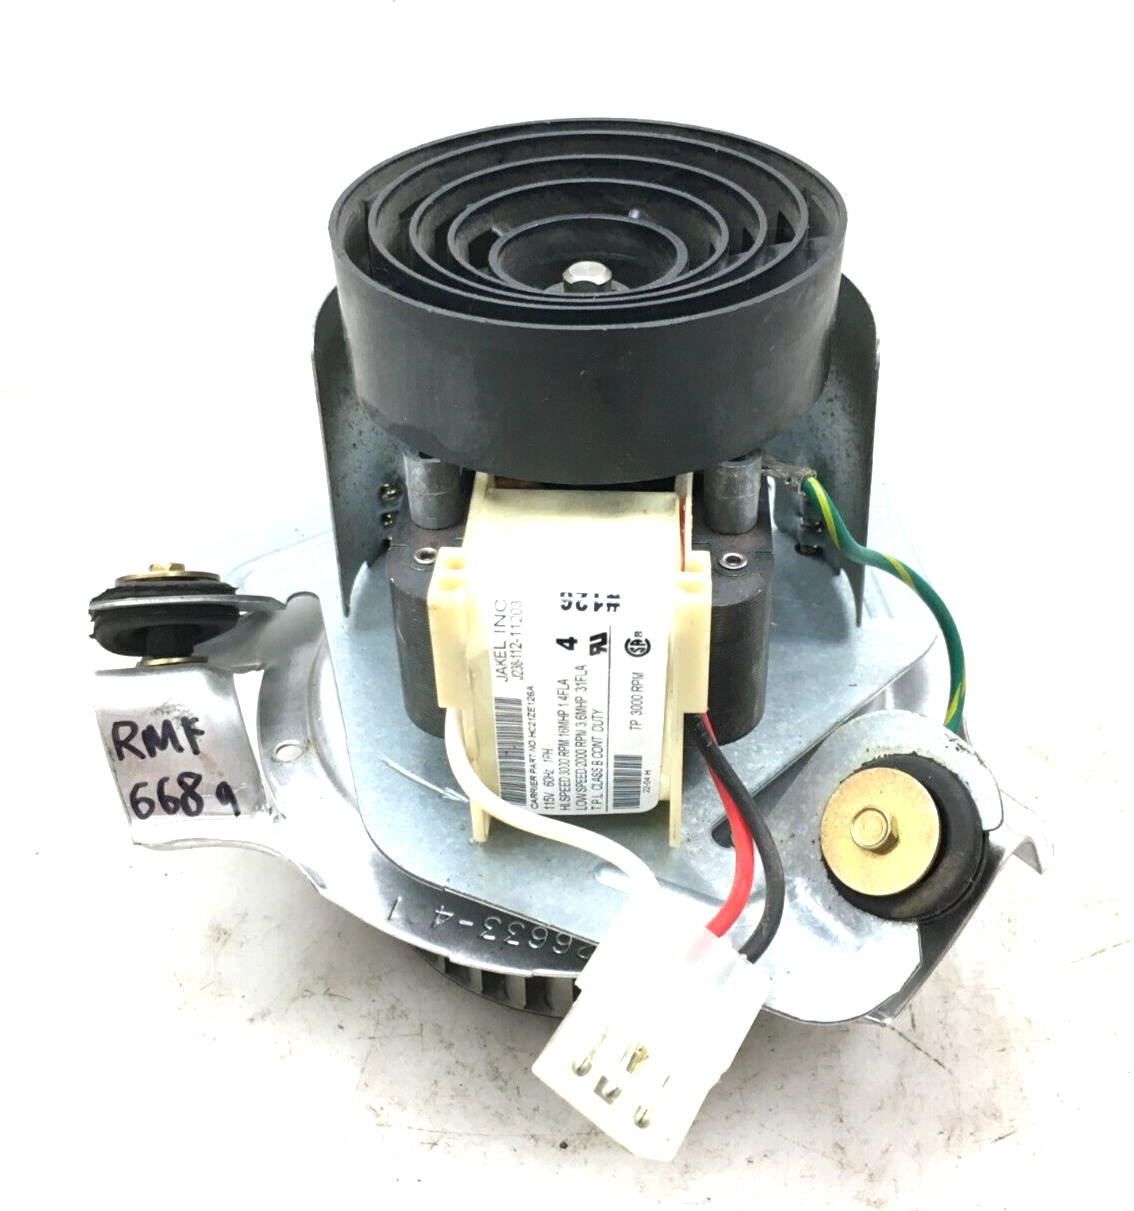 JAKEL J238-112-11203 Draft Inducer Blower Motor HC21ZE126A used refurb. #RMF668A